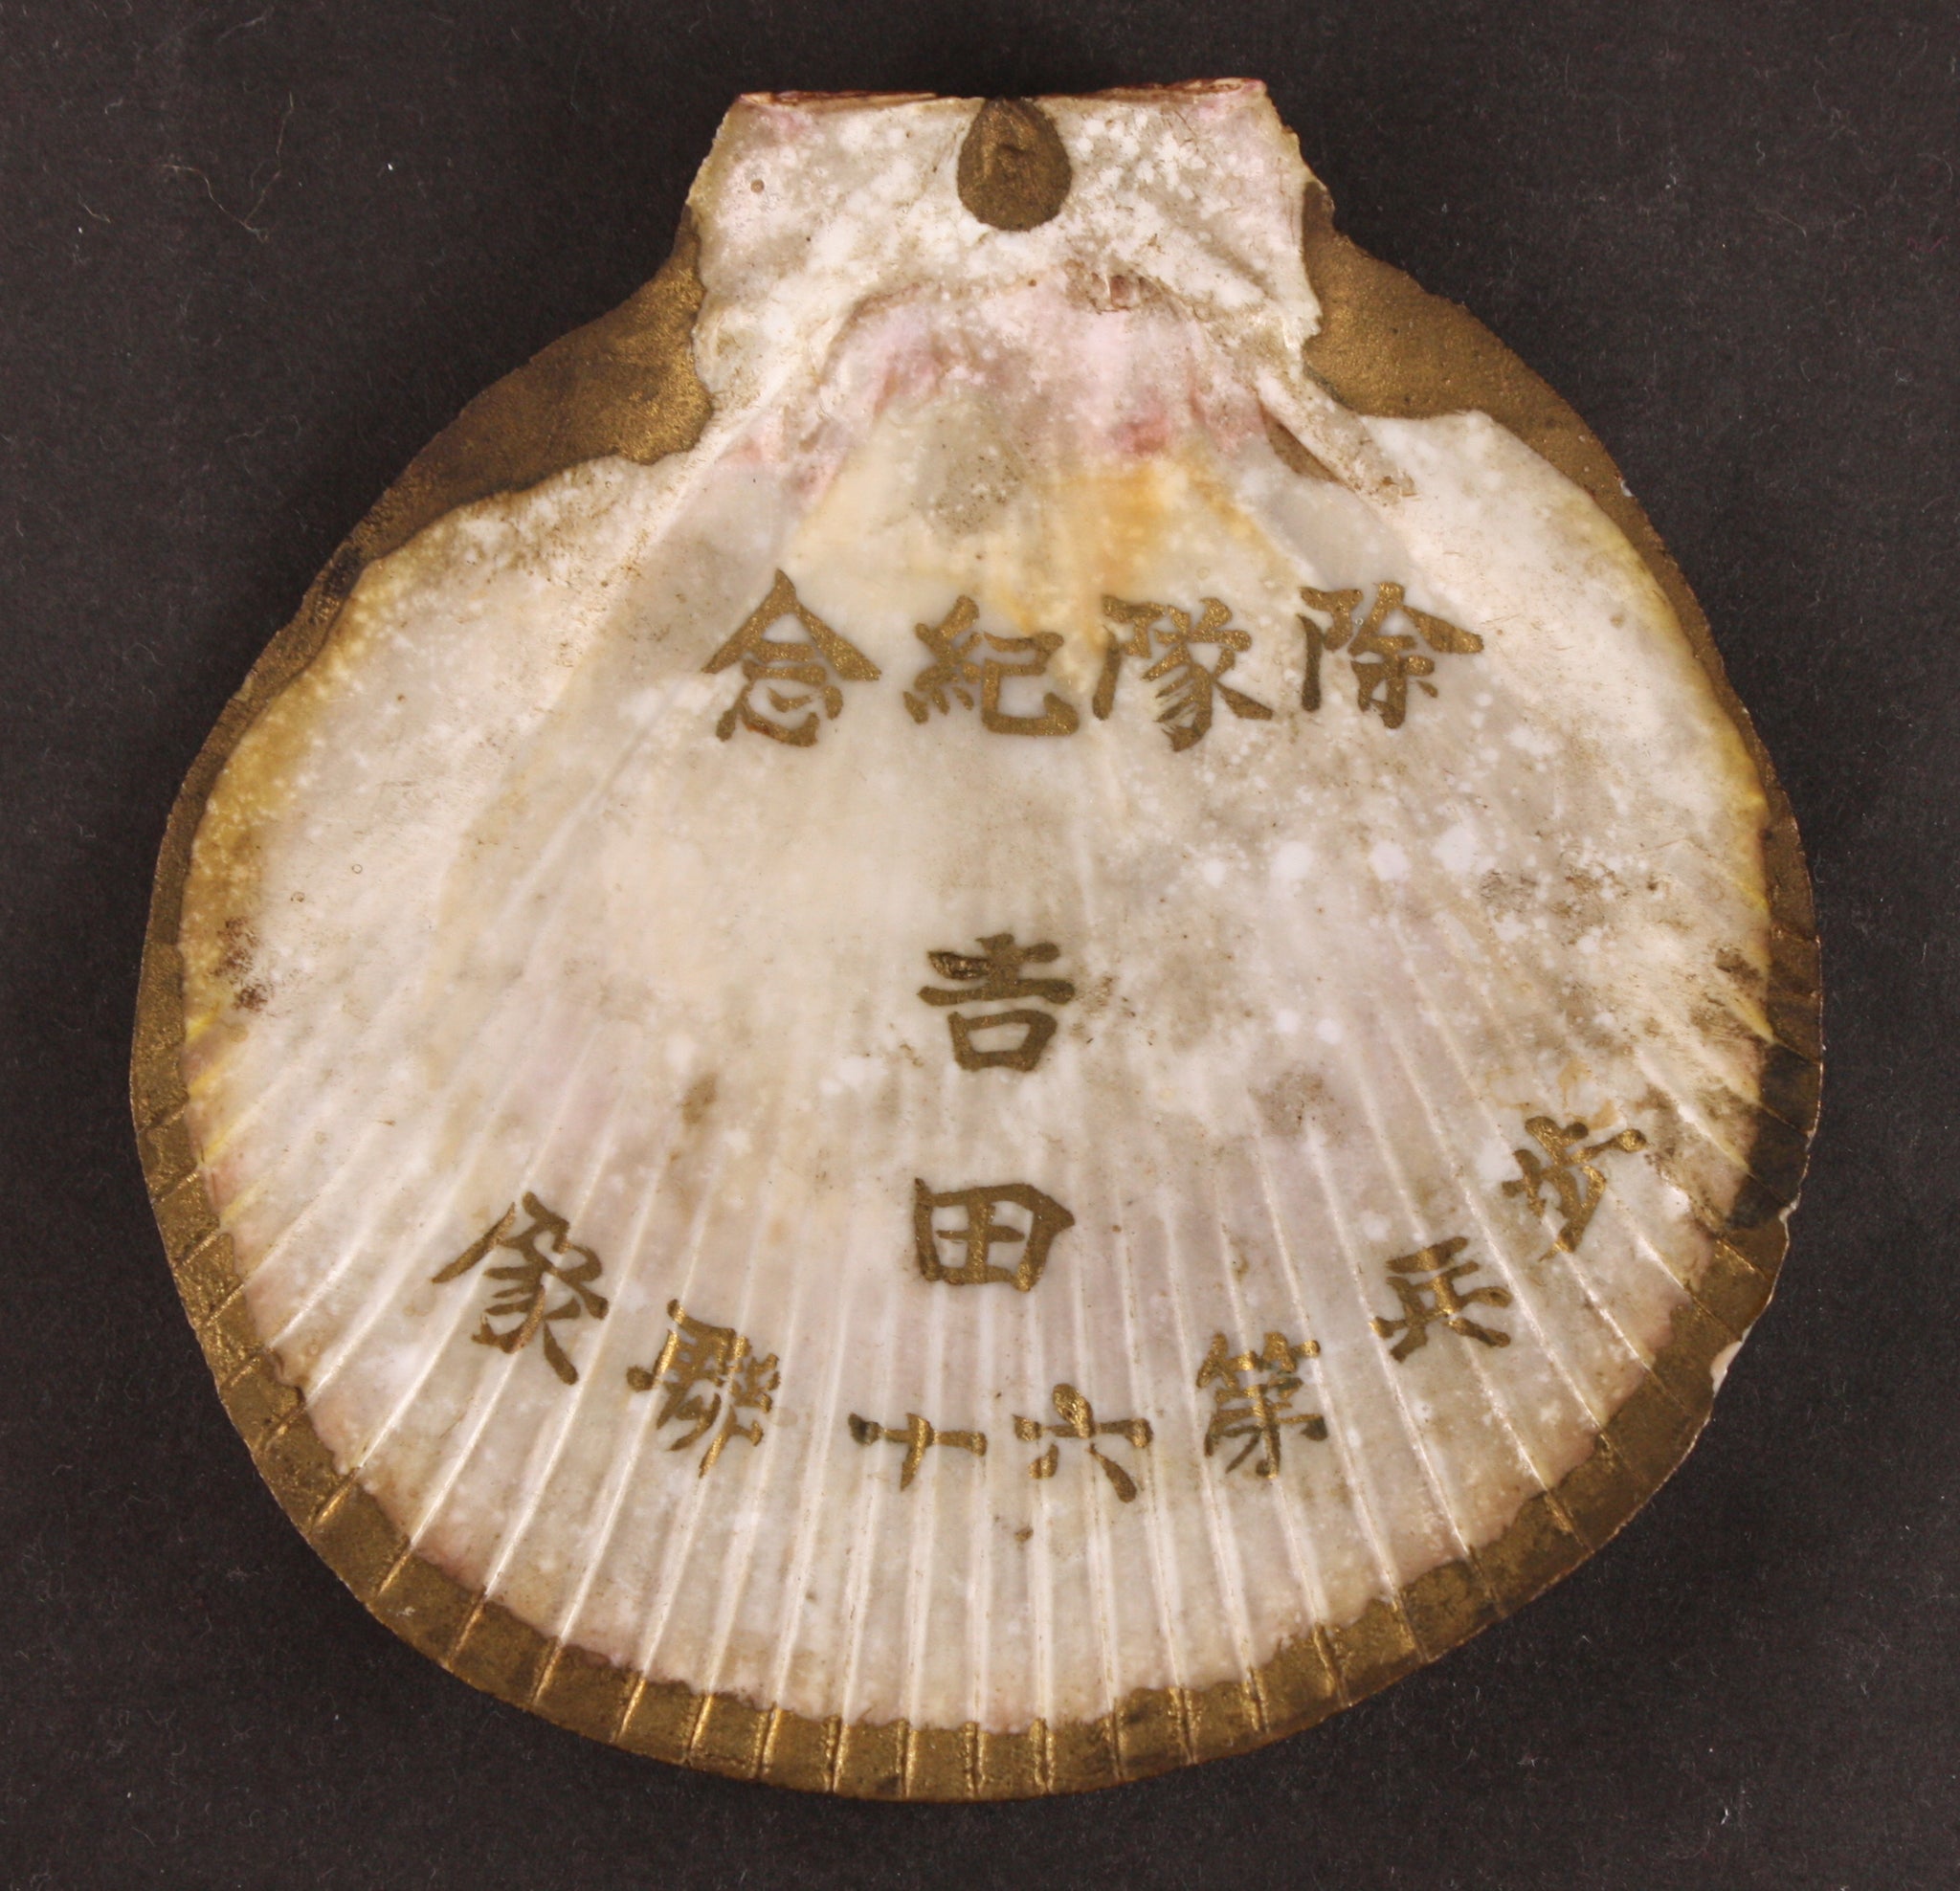 Rare Antique Japanese Military Seashell Infantry Army Commemorative Item